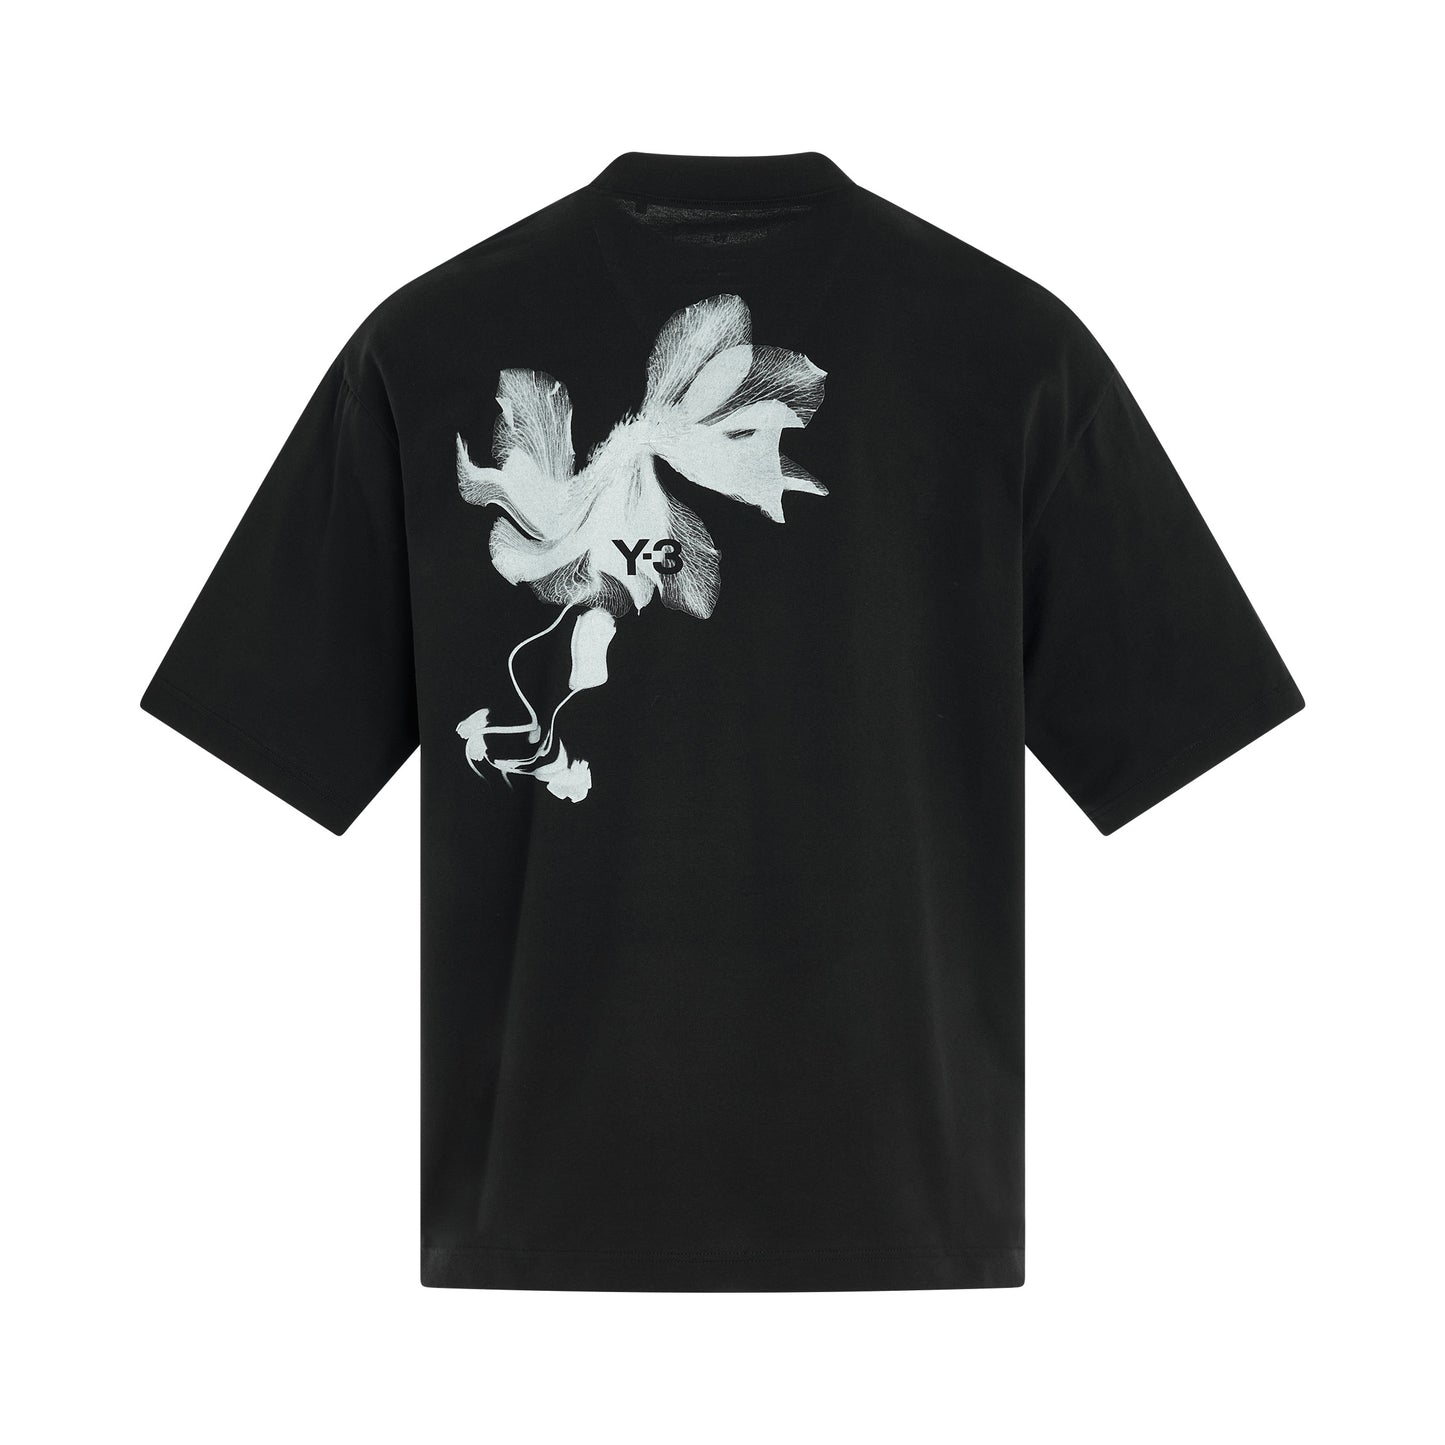 Flower Graphic T-Shirt 2 in Black